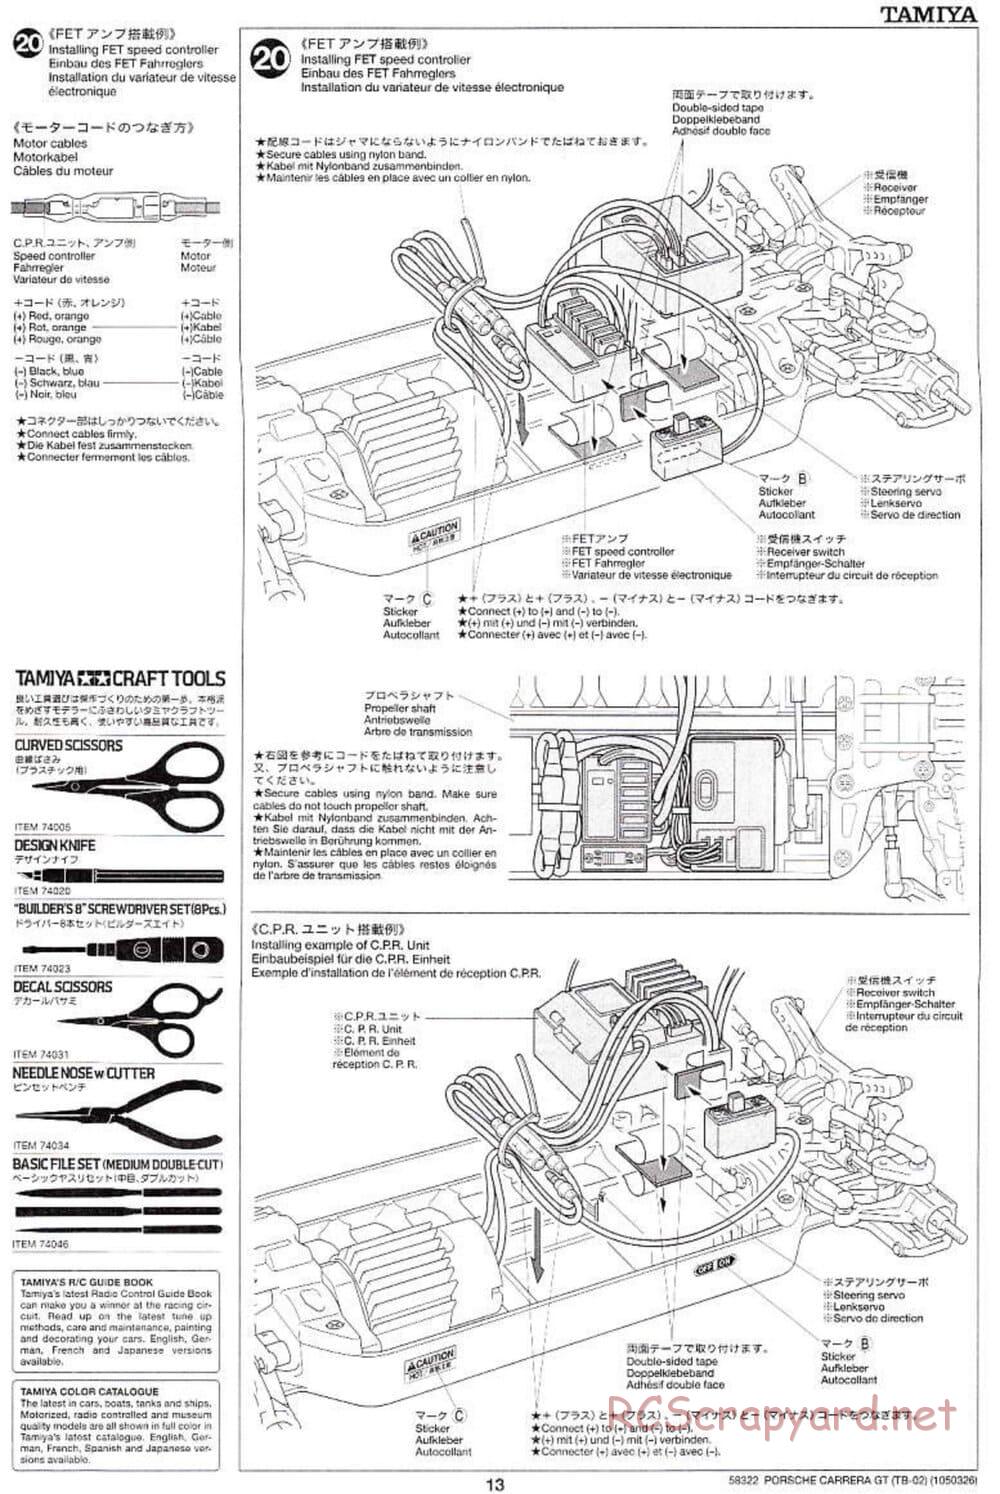 Tamiya - Porsche Carrera GT - TB-02 Chassis - Manual - Page 13